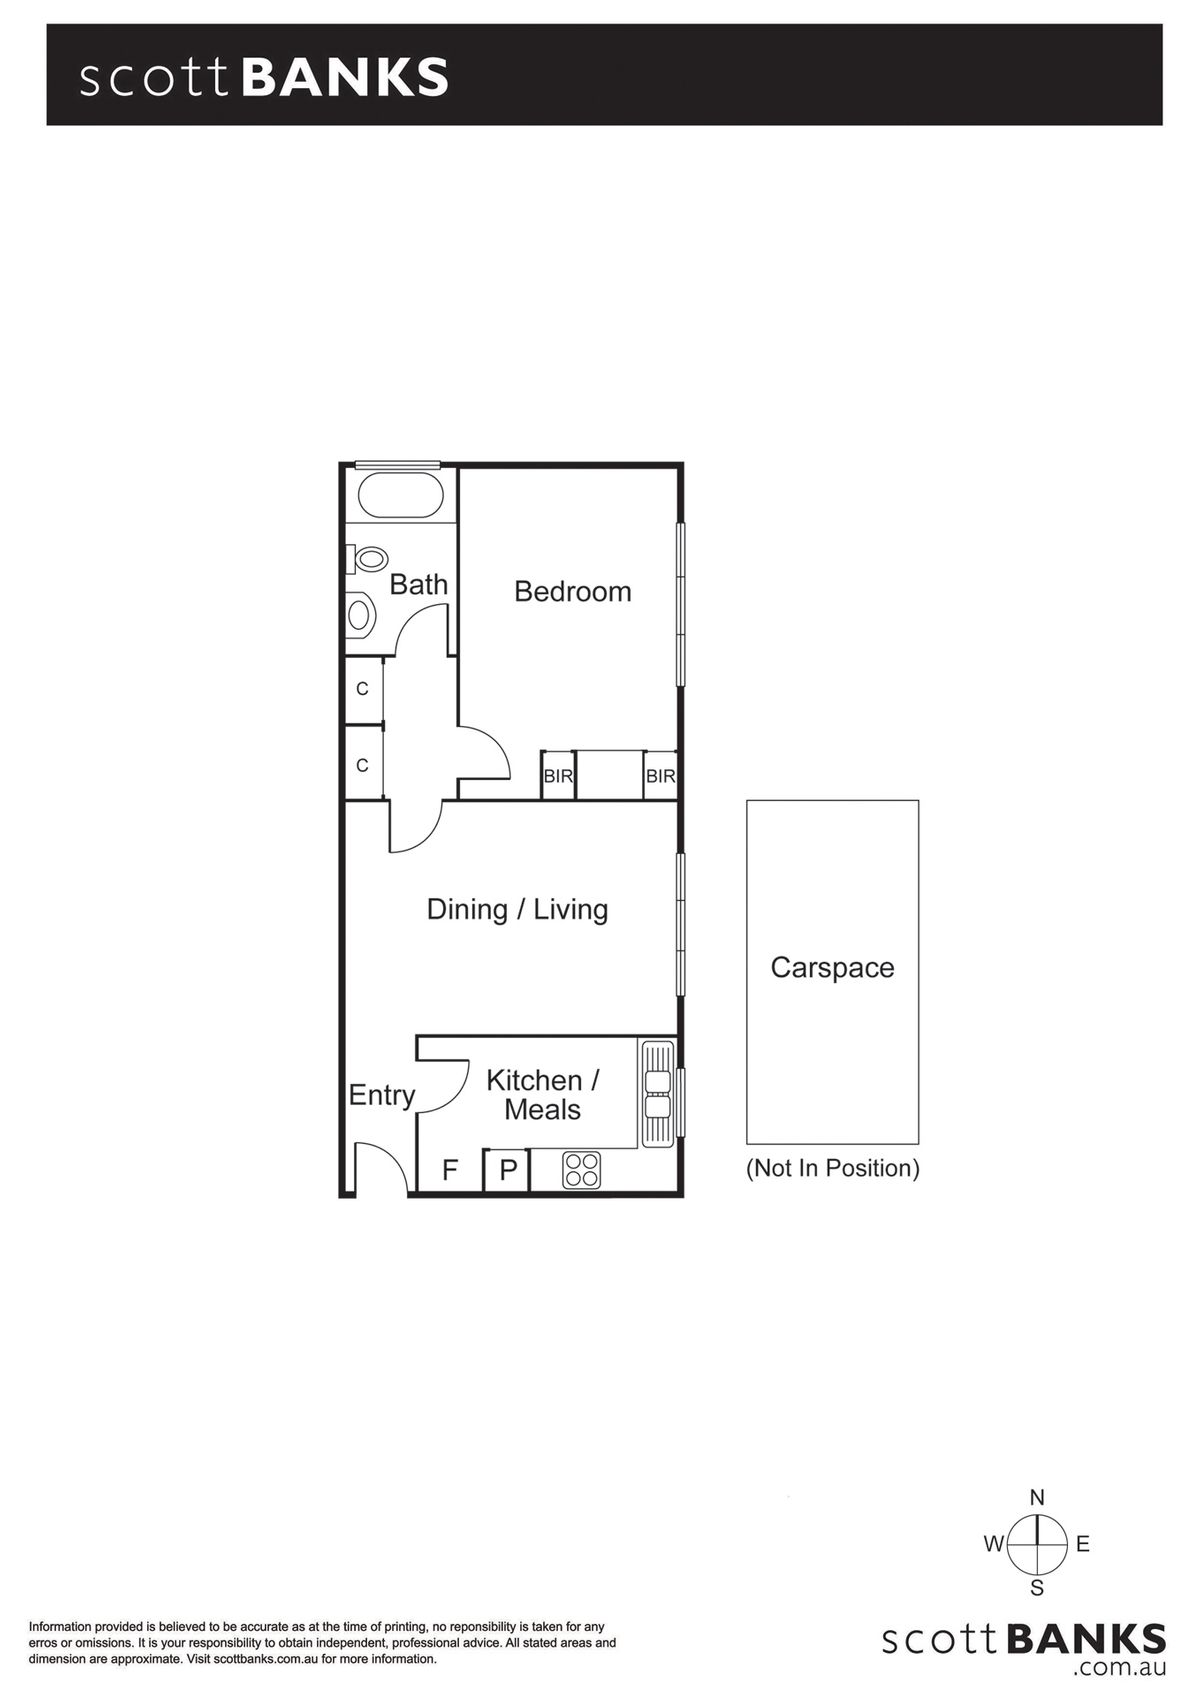 LoRes Floor Plan 25 10 Acland Street St Kilda no measurements